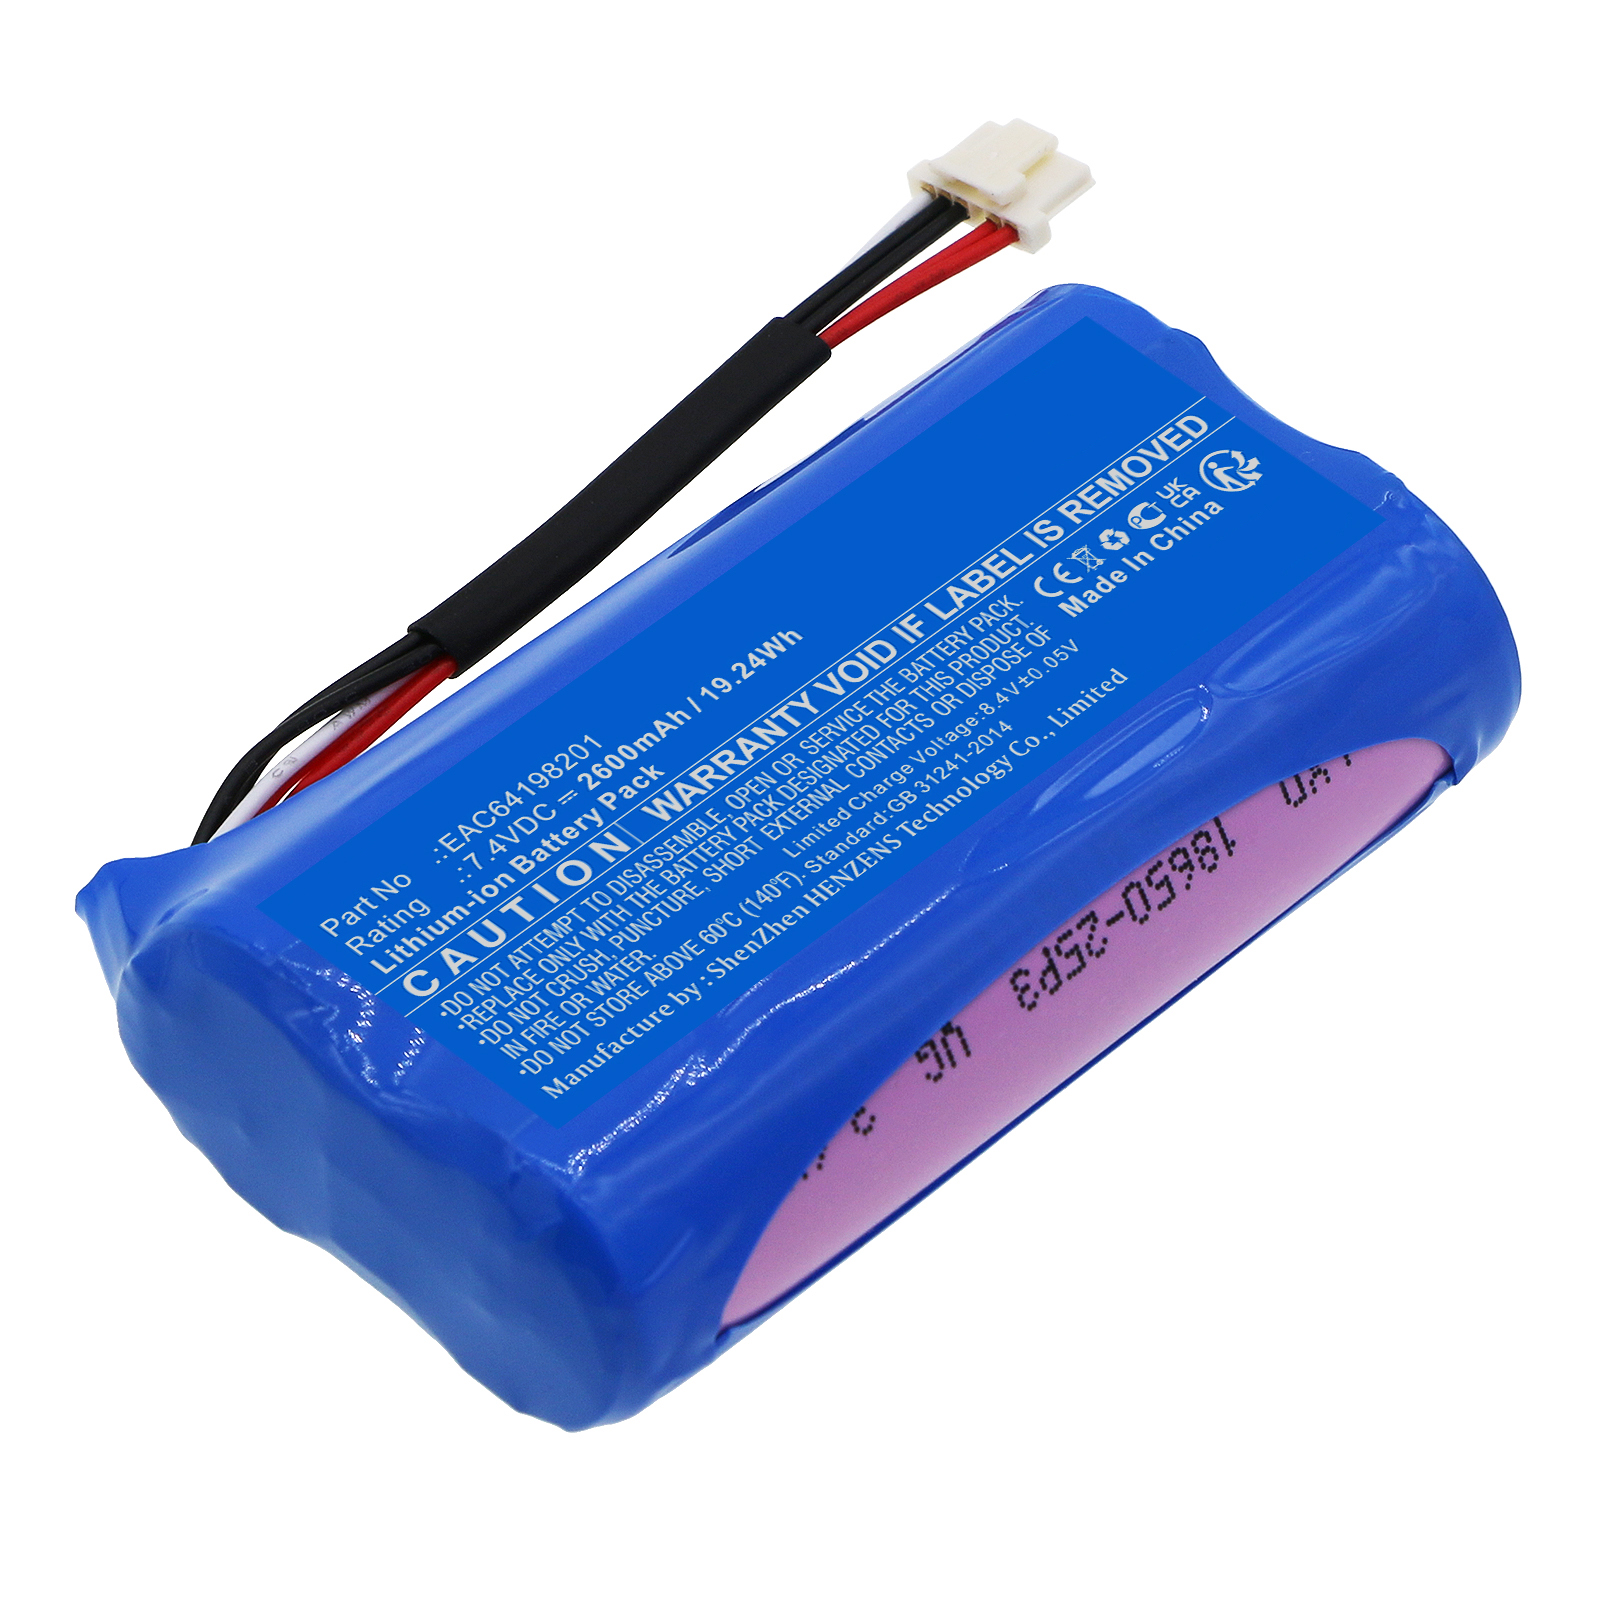 Batteries for LGProjector